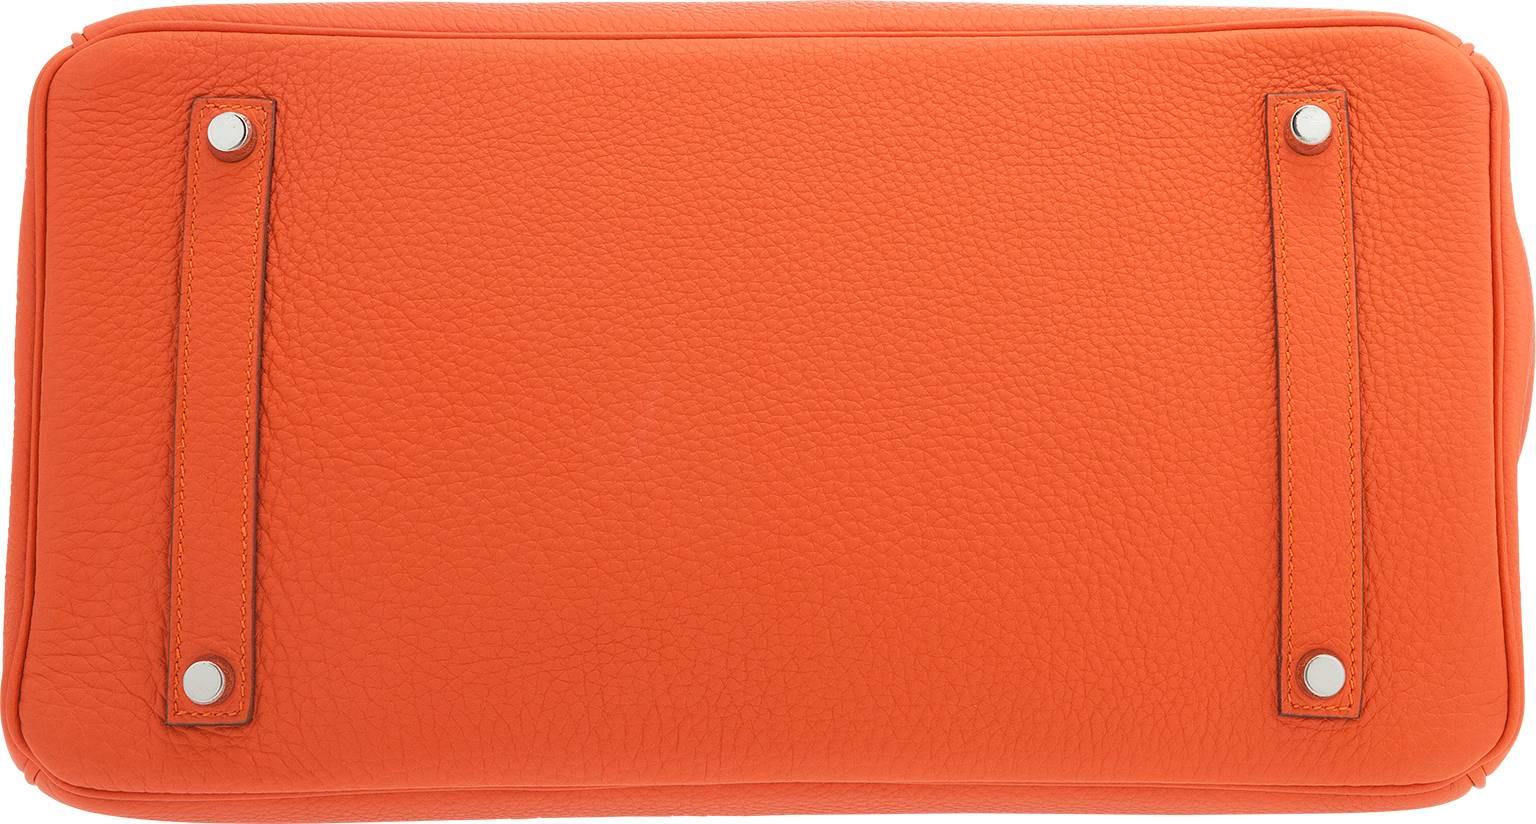 Women's Hermes 35cm Orange Poppy Togo Leather Birkin Bag with Palladium Hardware For Sale